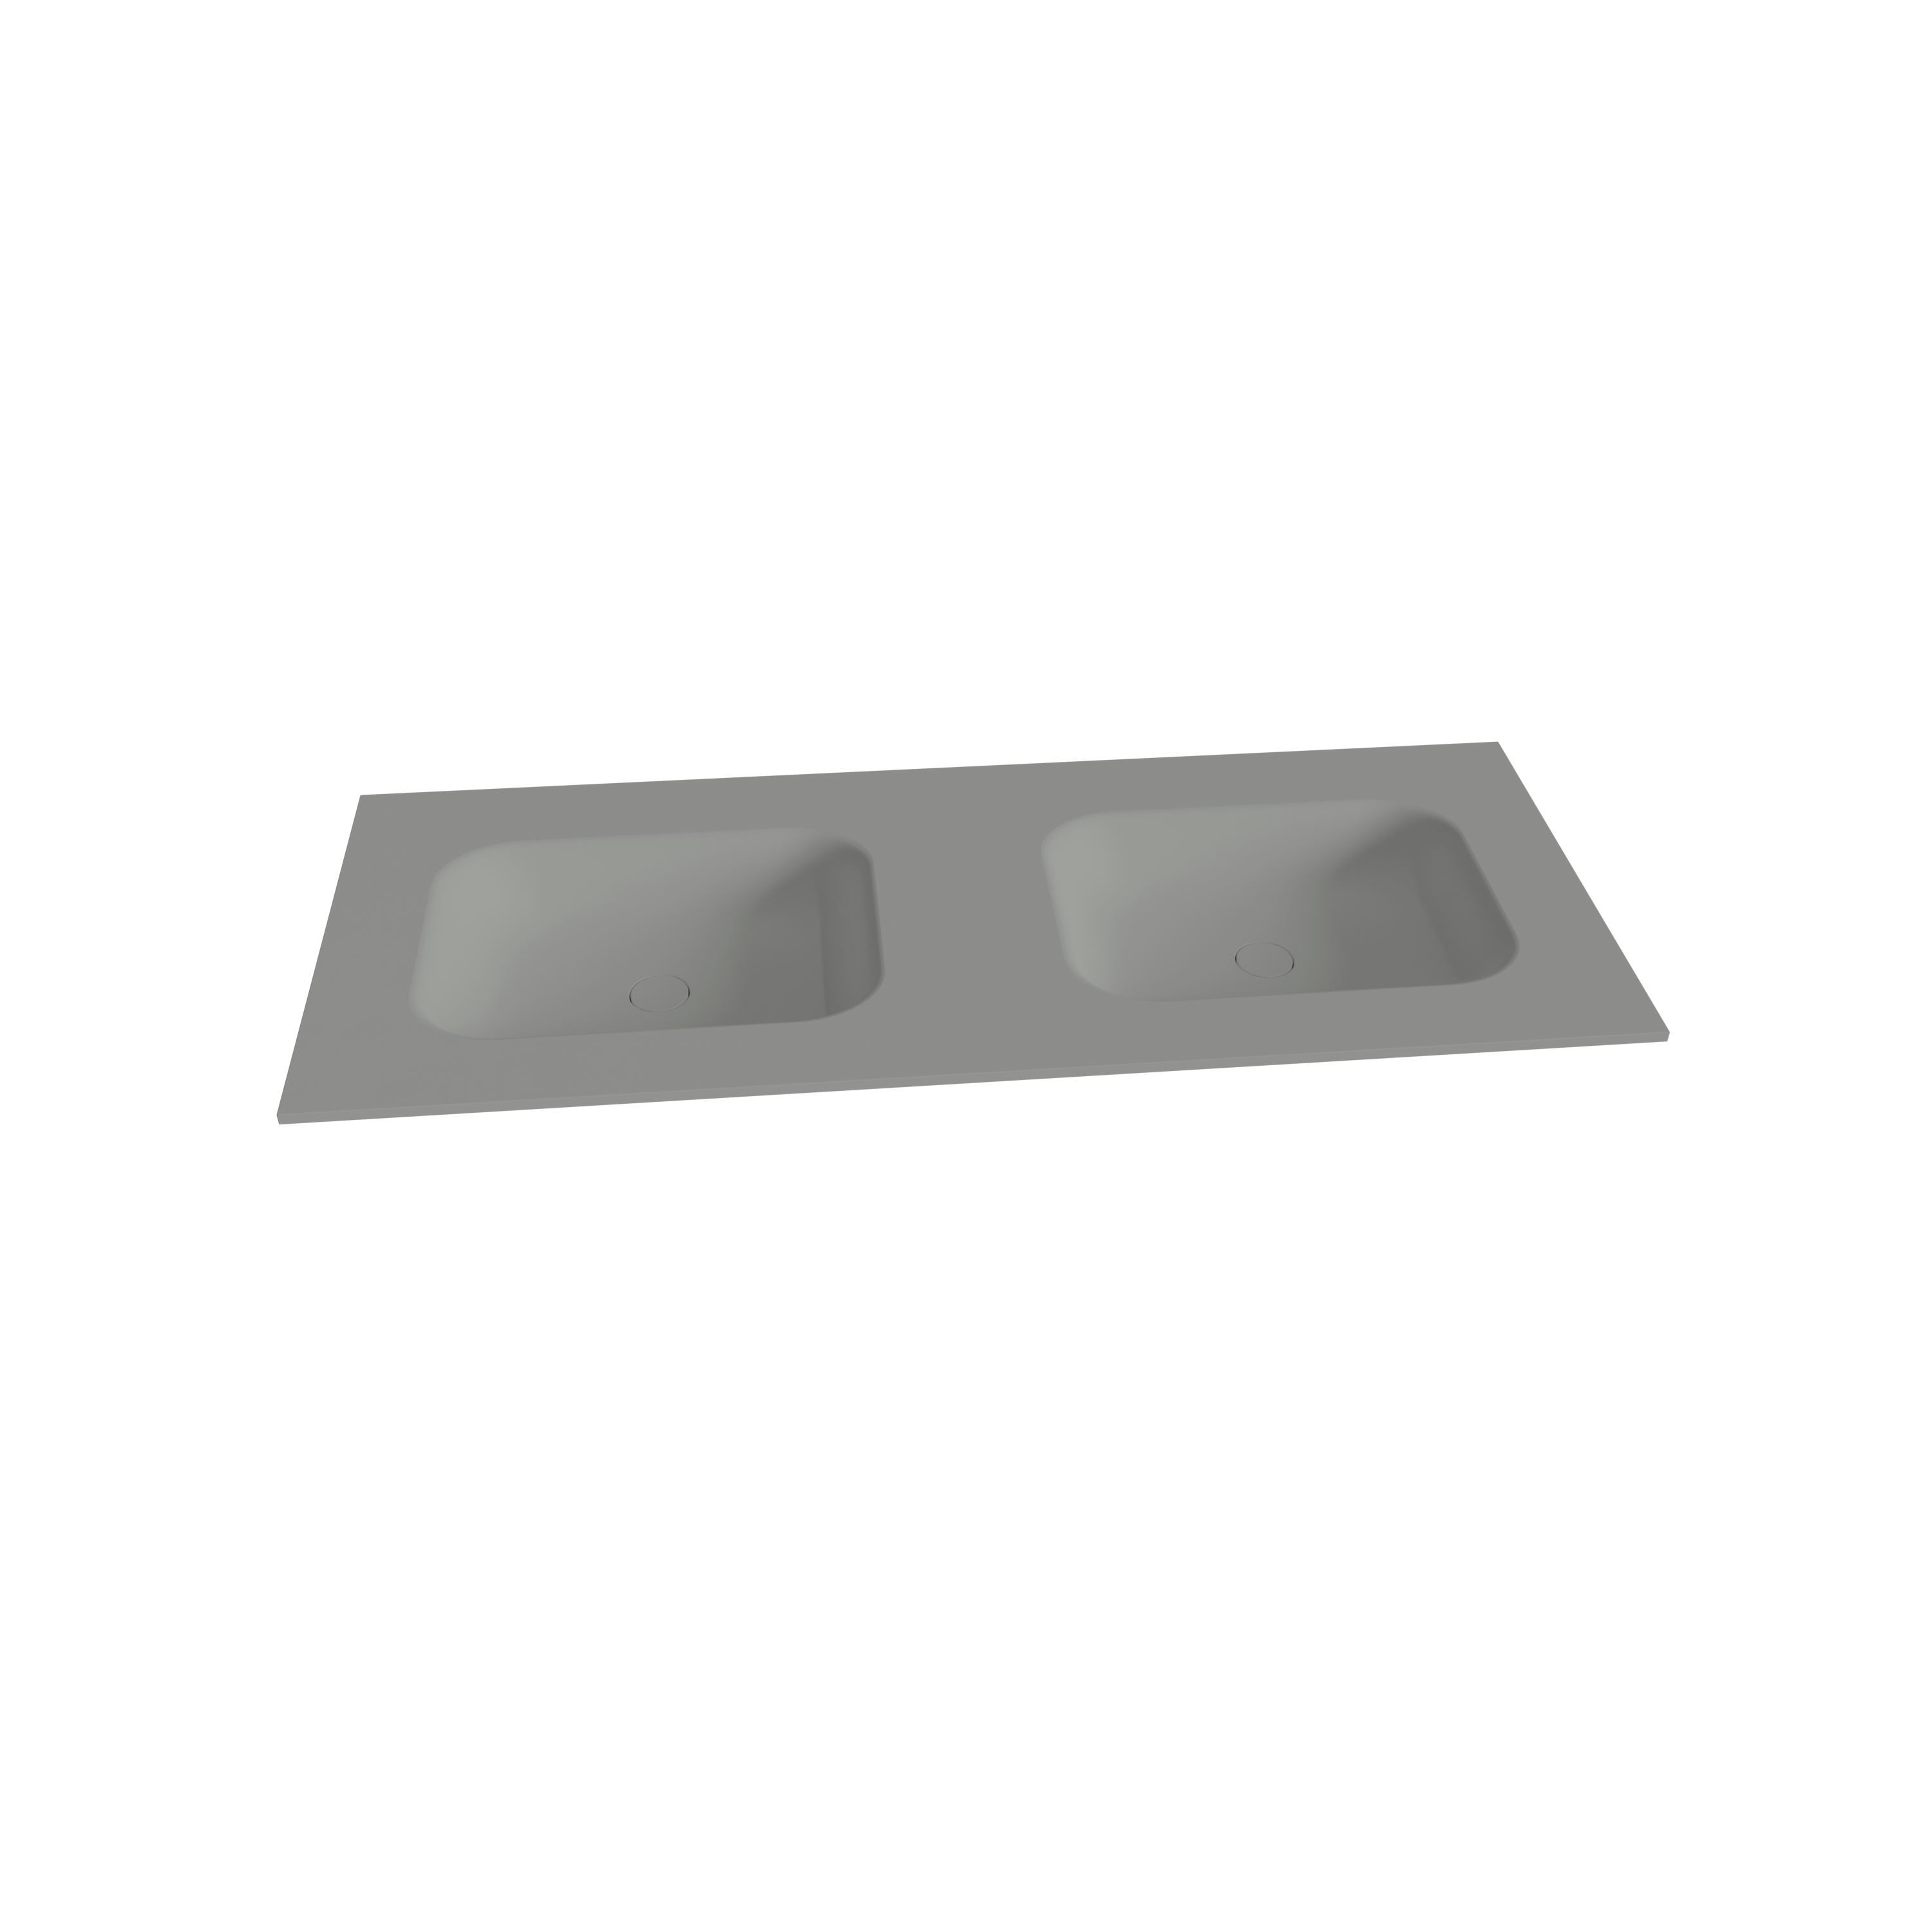 Balmani Balmani Tablo Arcato dubbele wastafel met afvoerplug mat steengrijze Solid Surface 135 x 55 cm